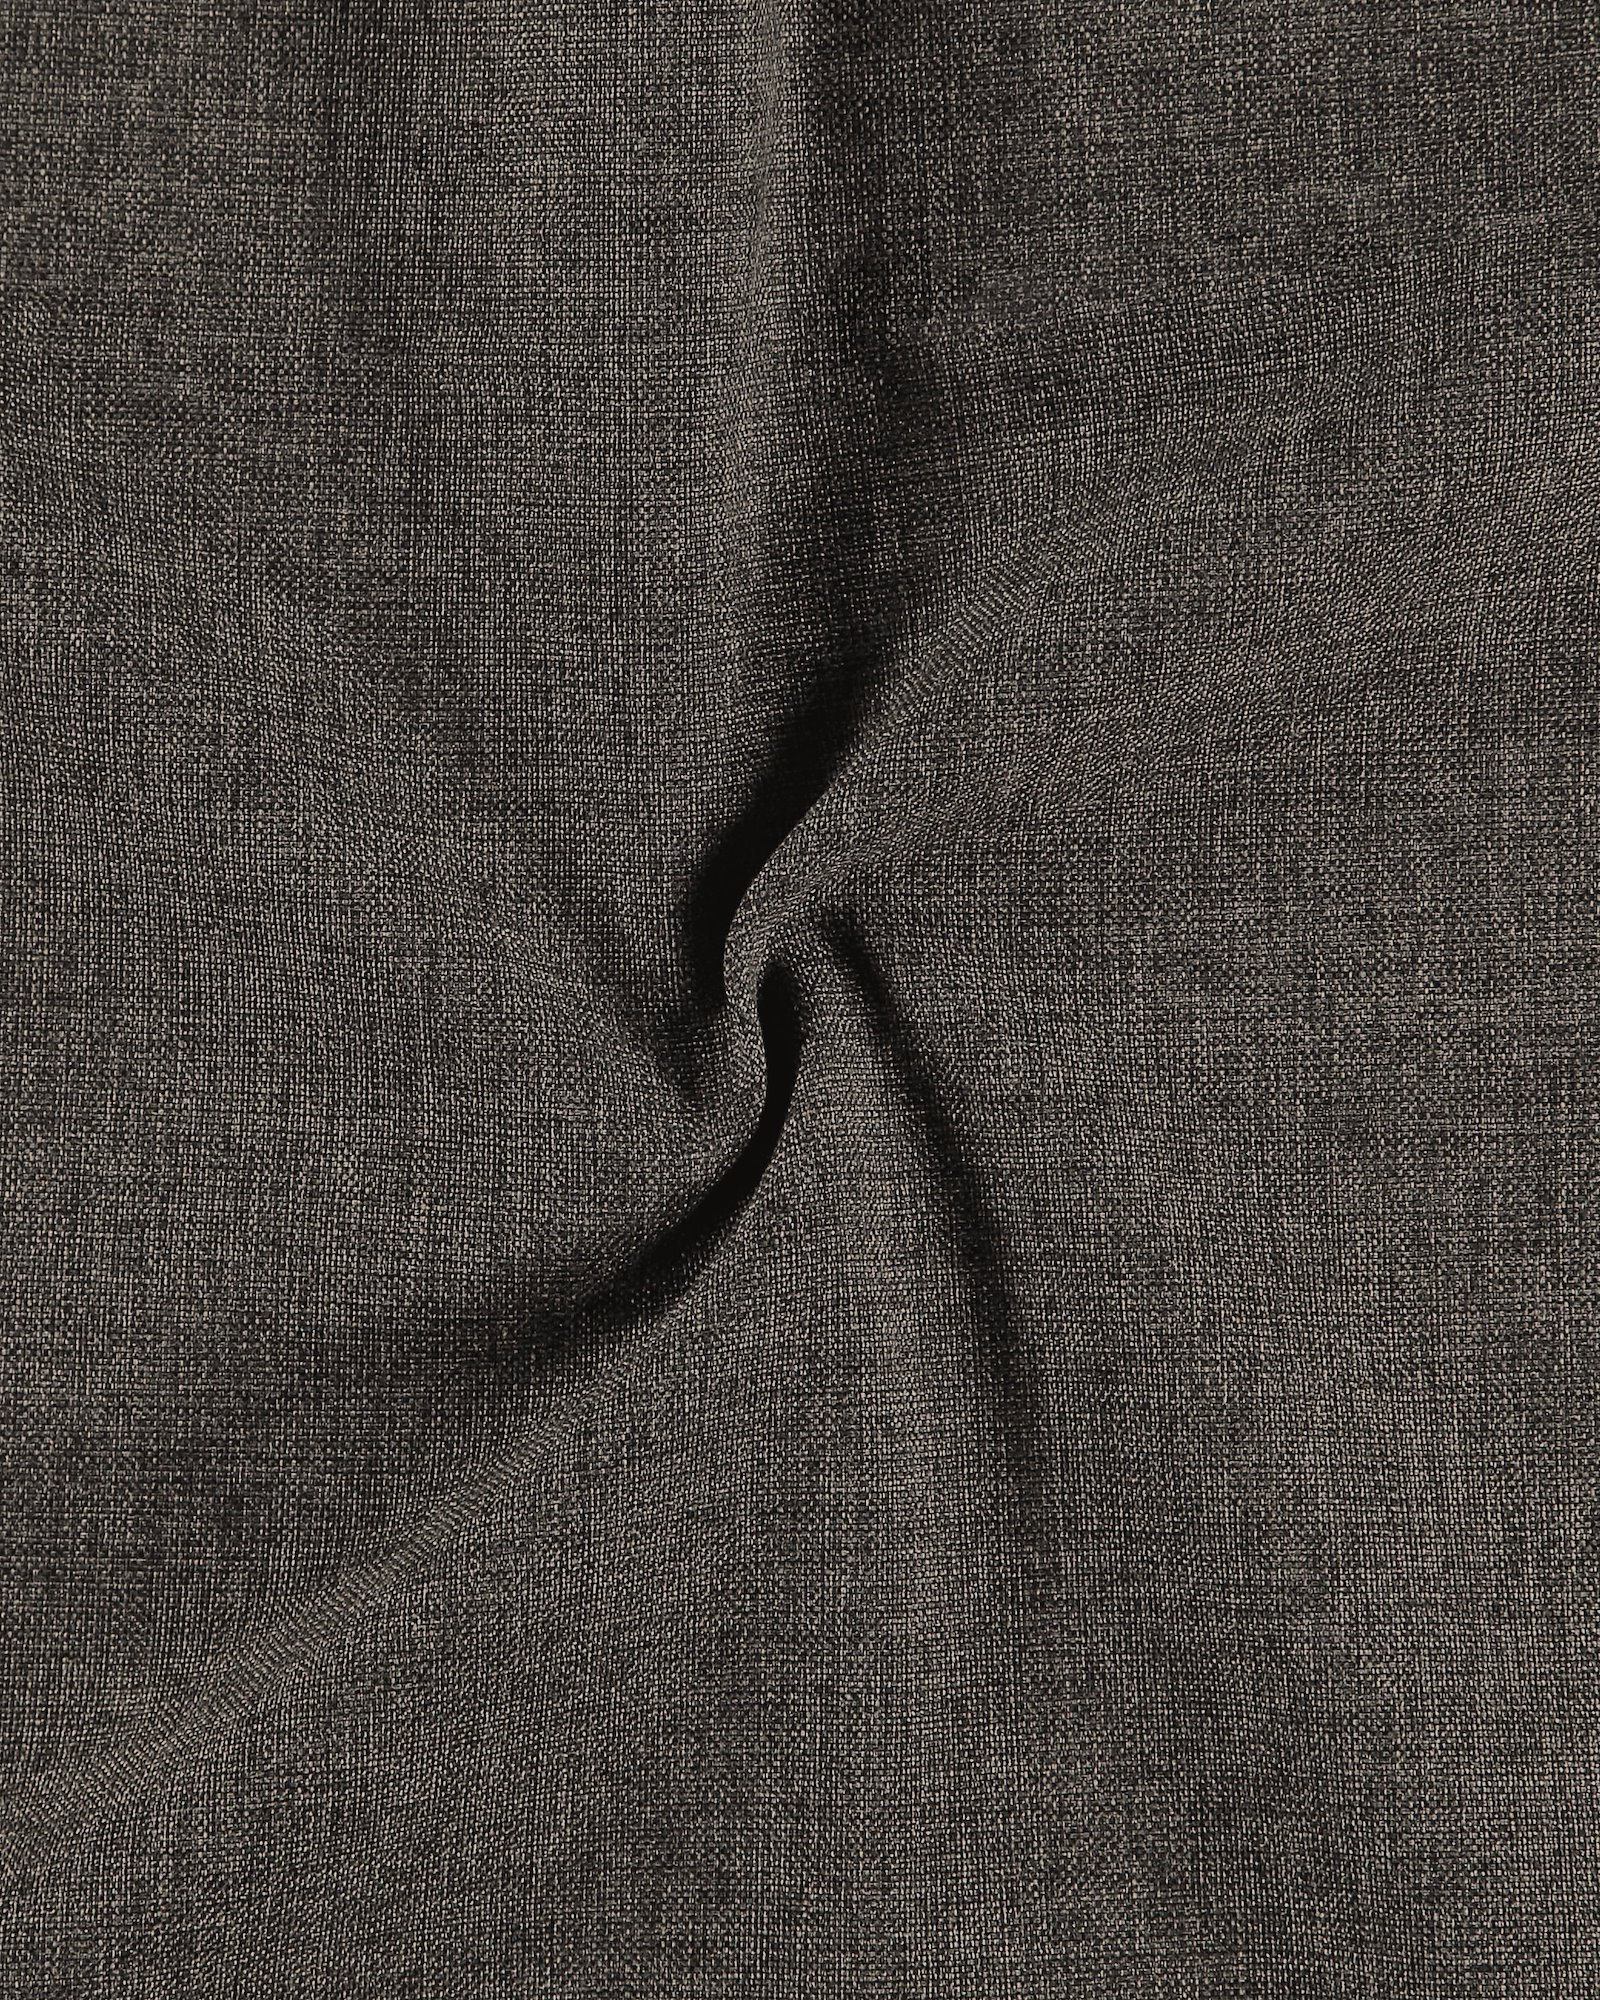 Upholstery texture dark grey/black 822161_pack